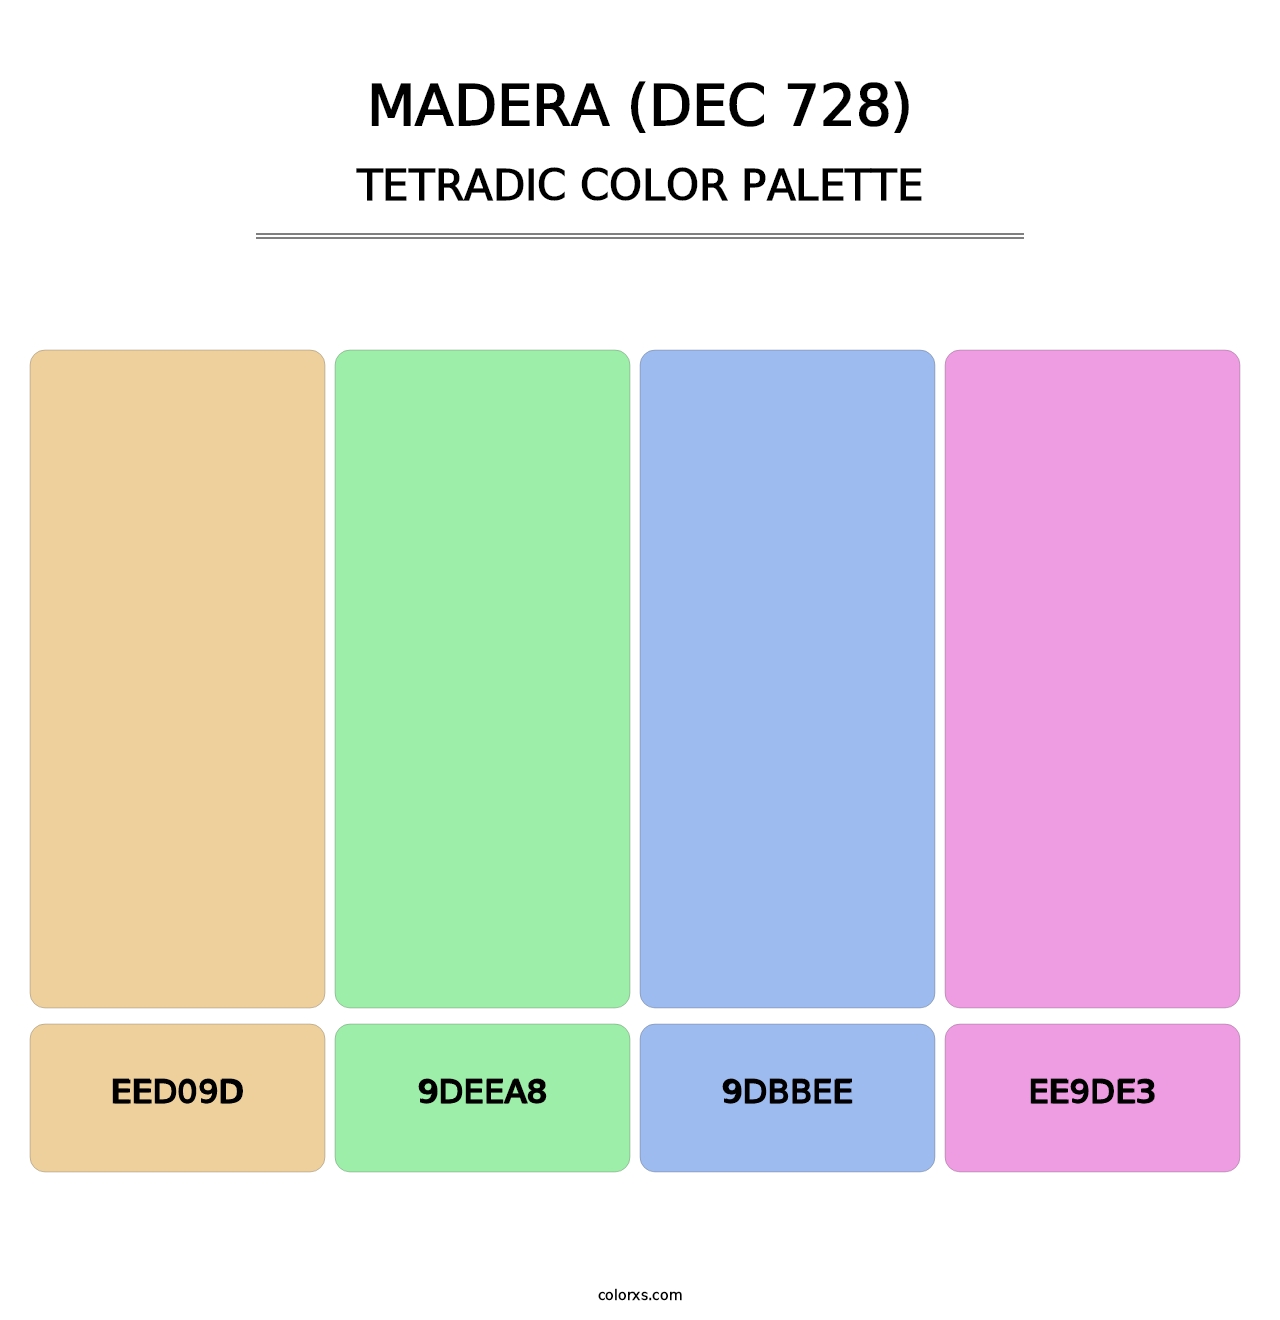 Madera (DEC 728) - Tetradic Color Palette